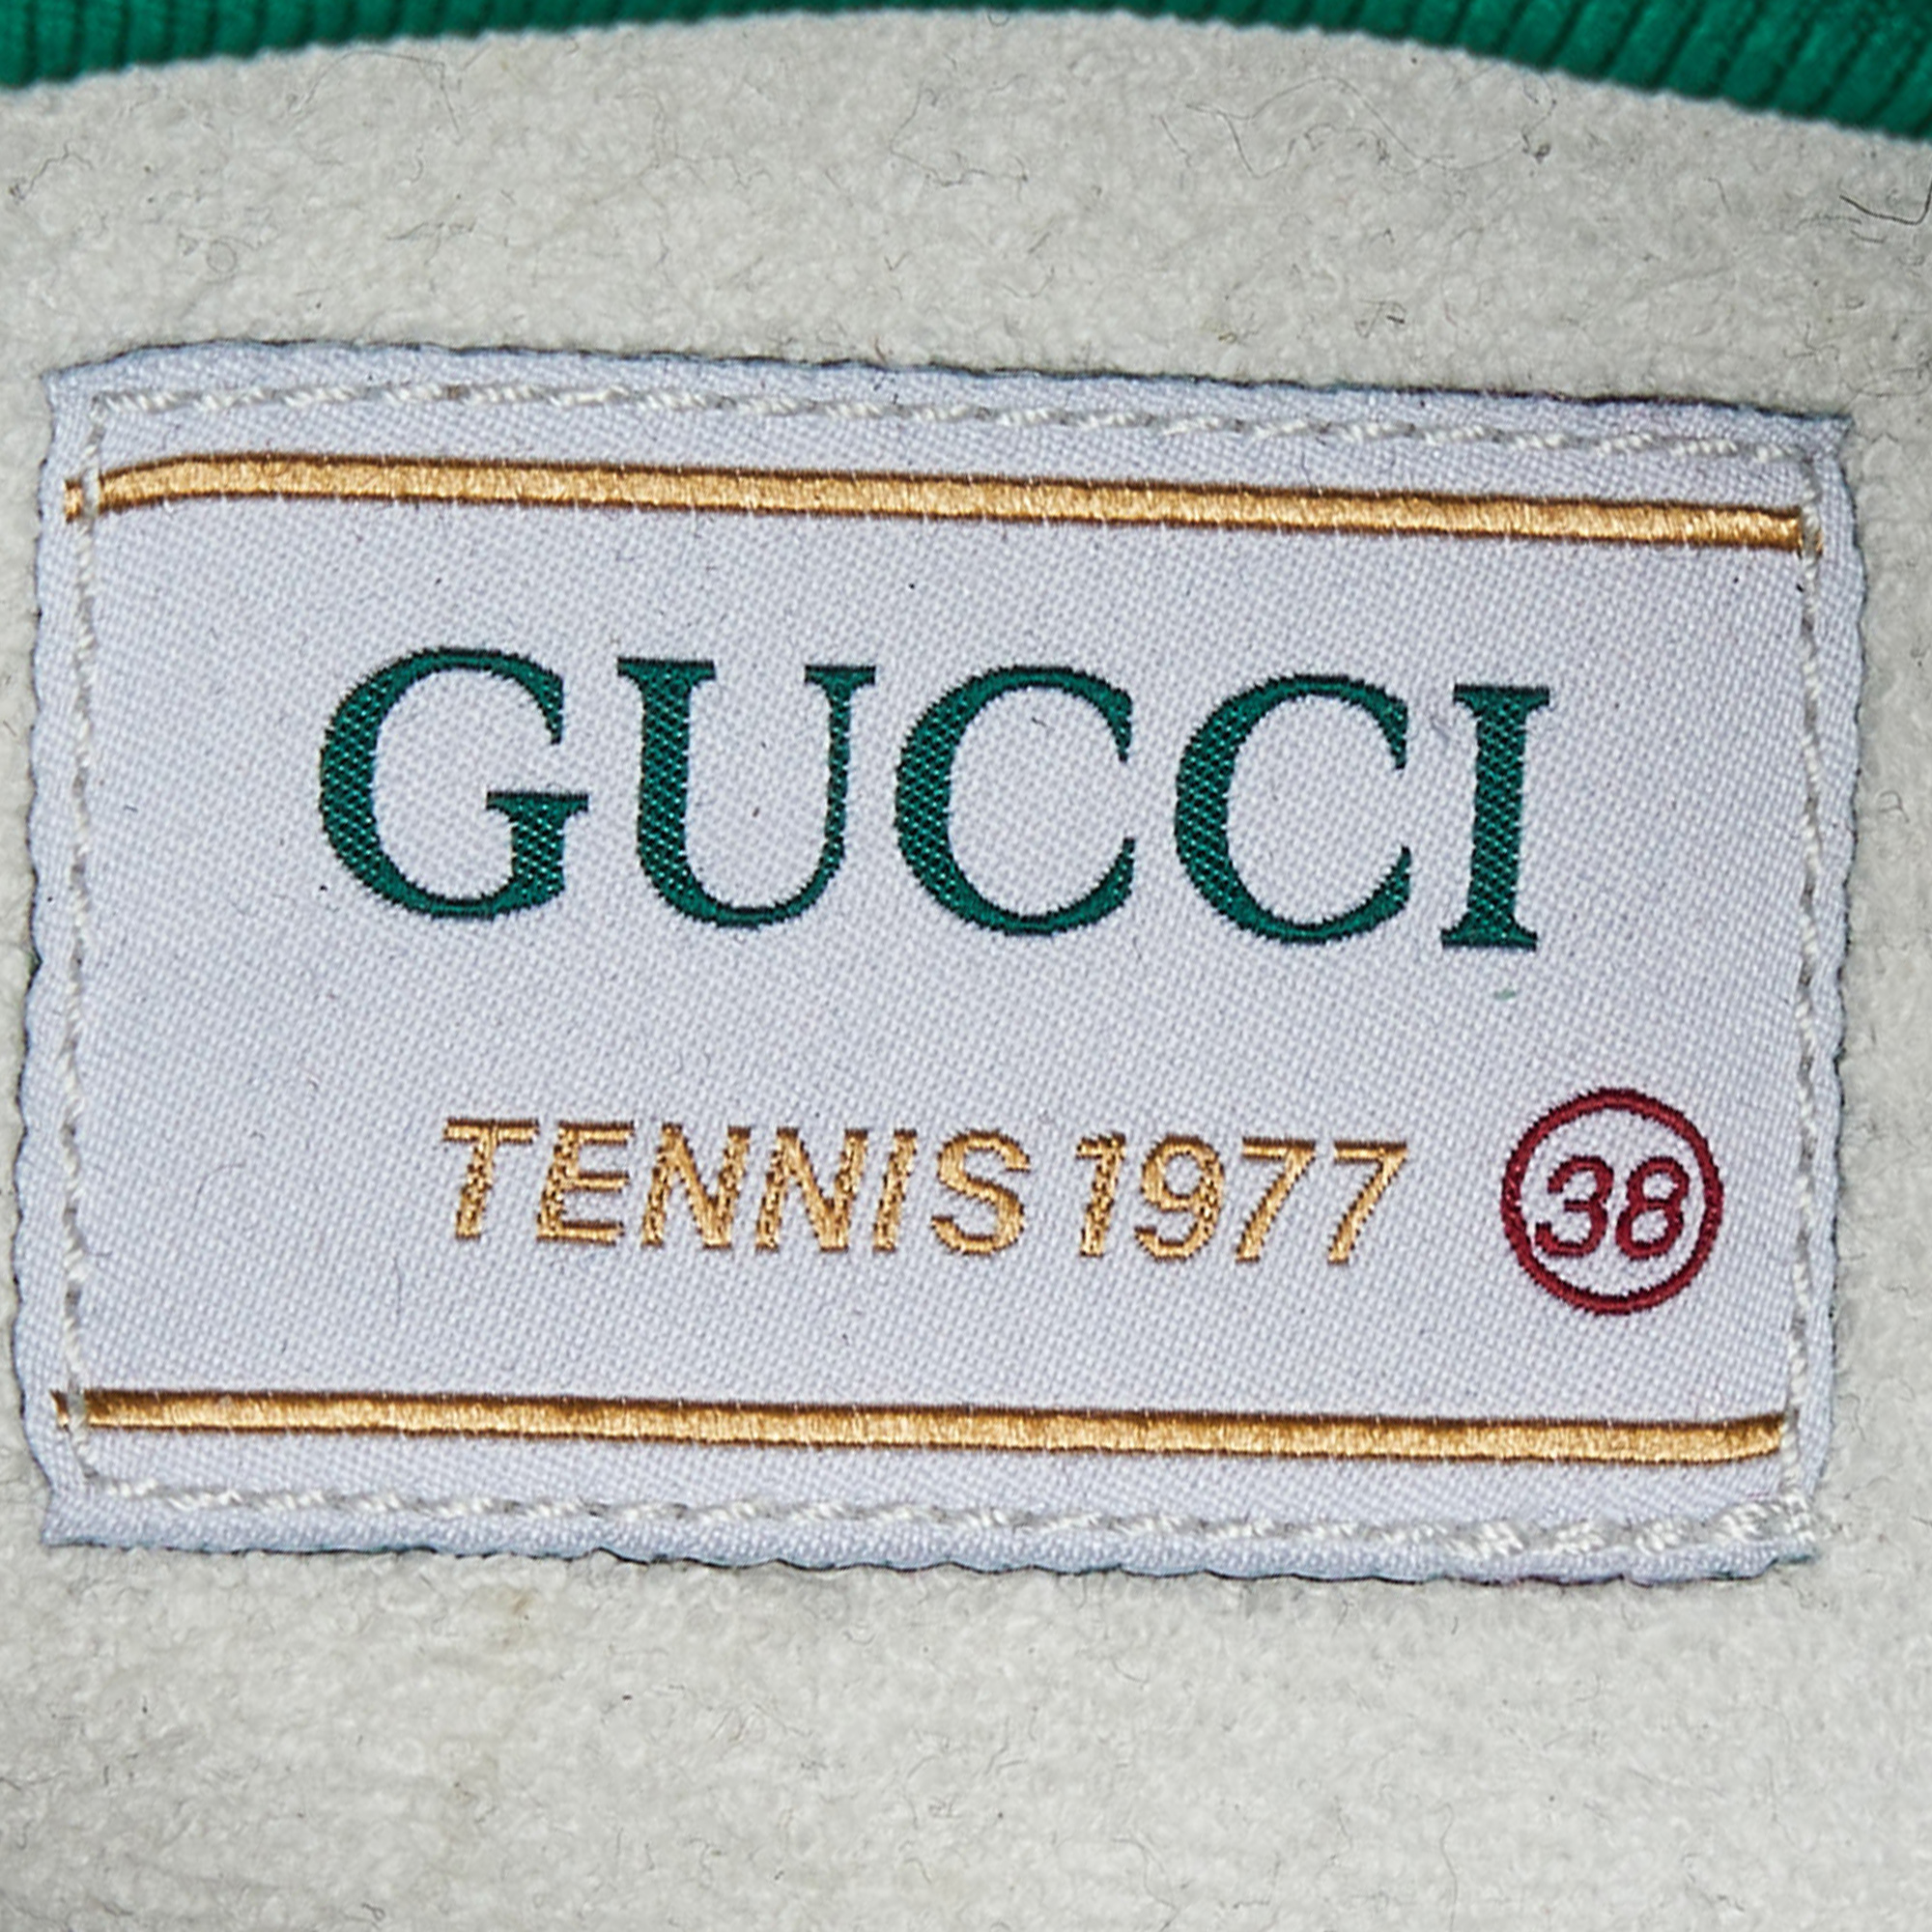 Gucci Multicolor GG Canvas Tennis 1977 Sneakers Size 38